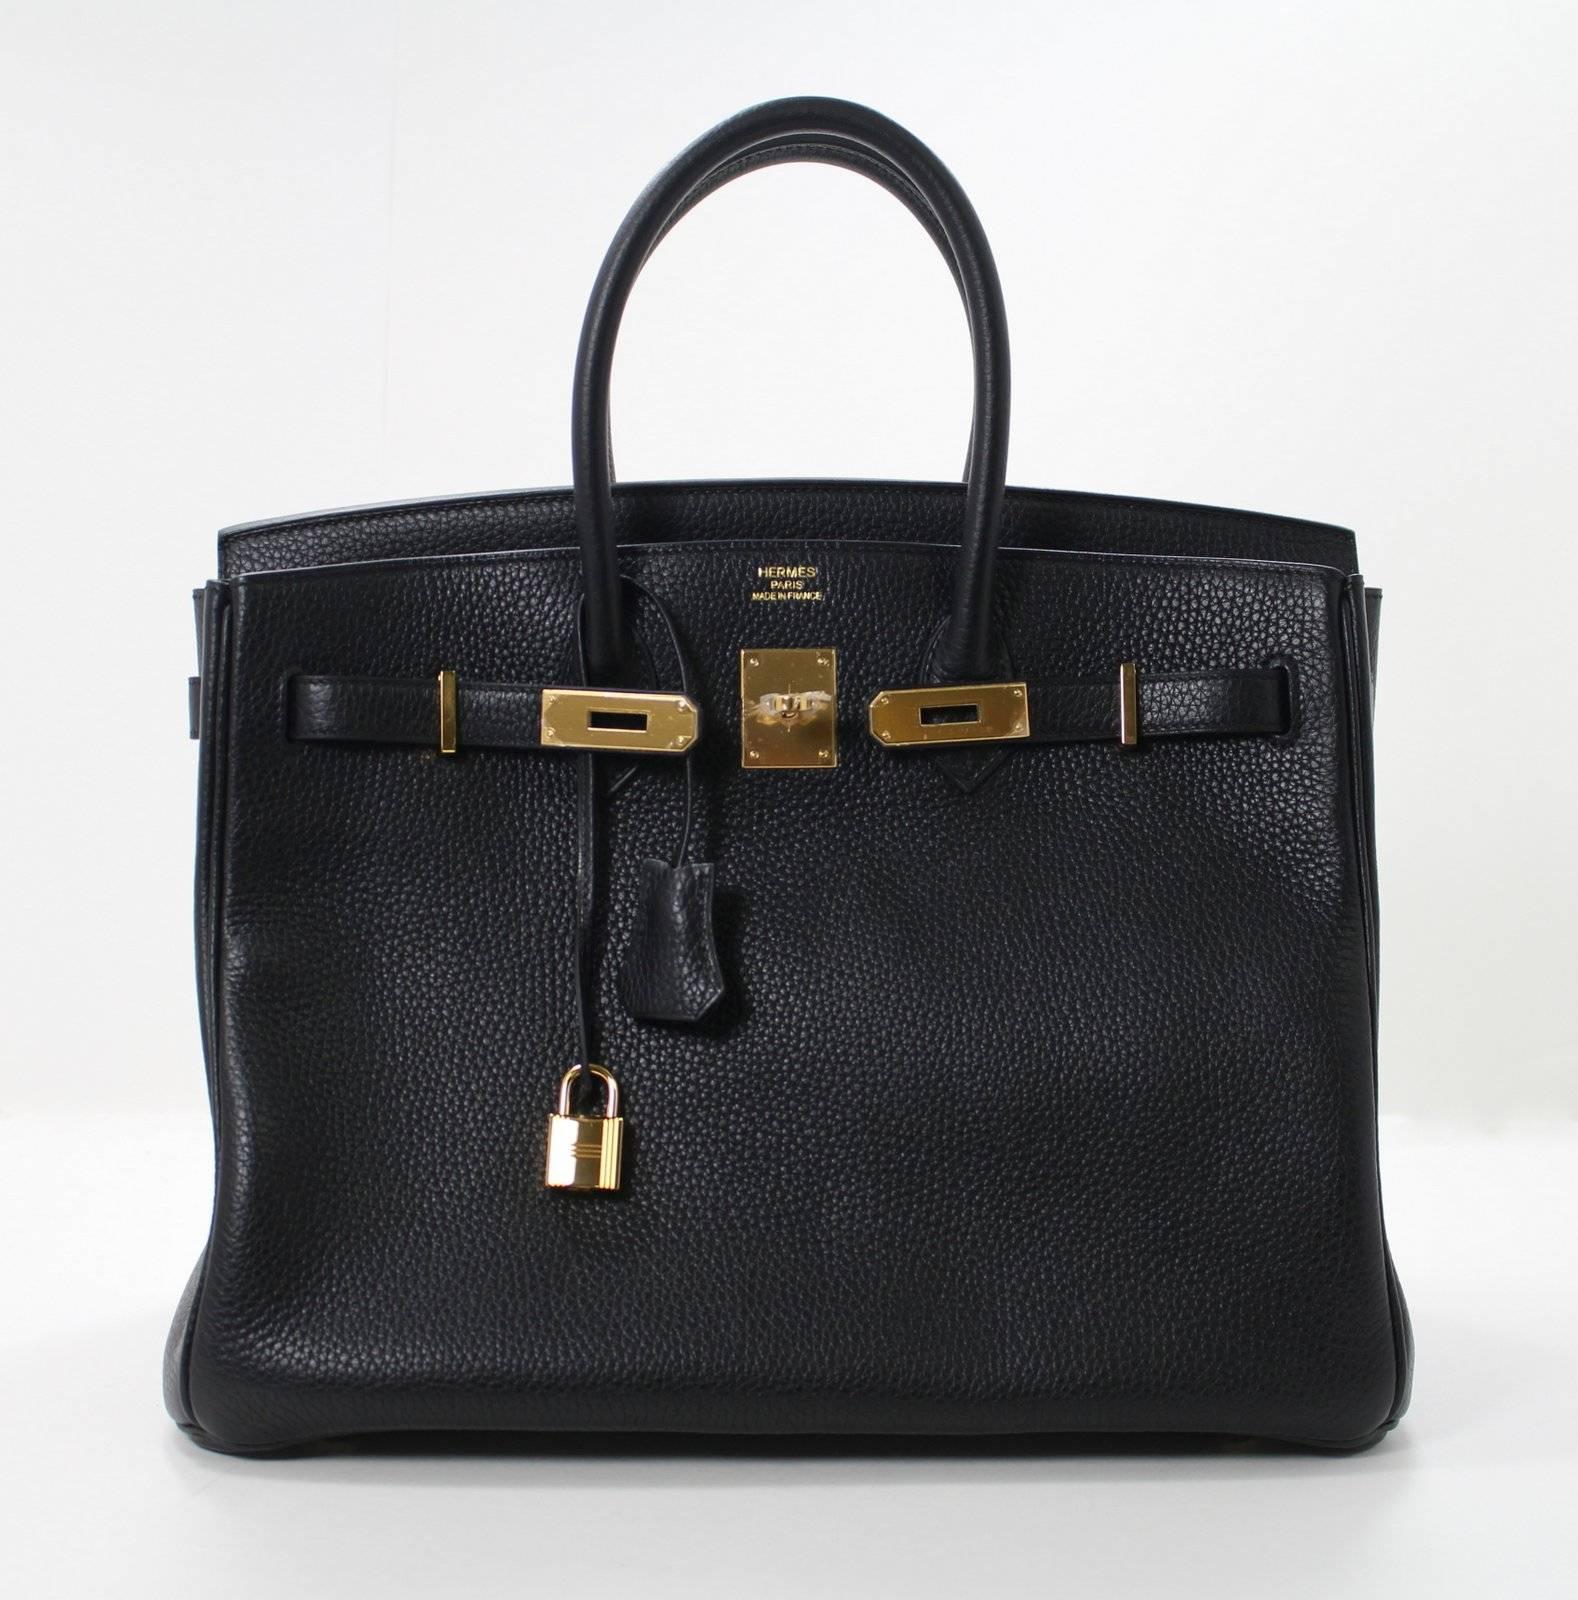 Hermès 35 cm Birkin Bag in BLACK Togo Leather with Gold 1